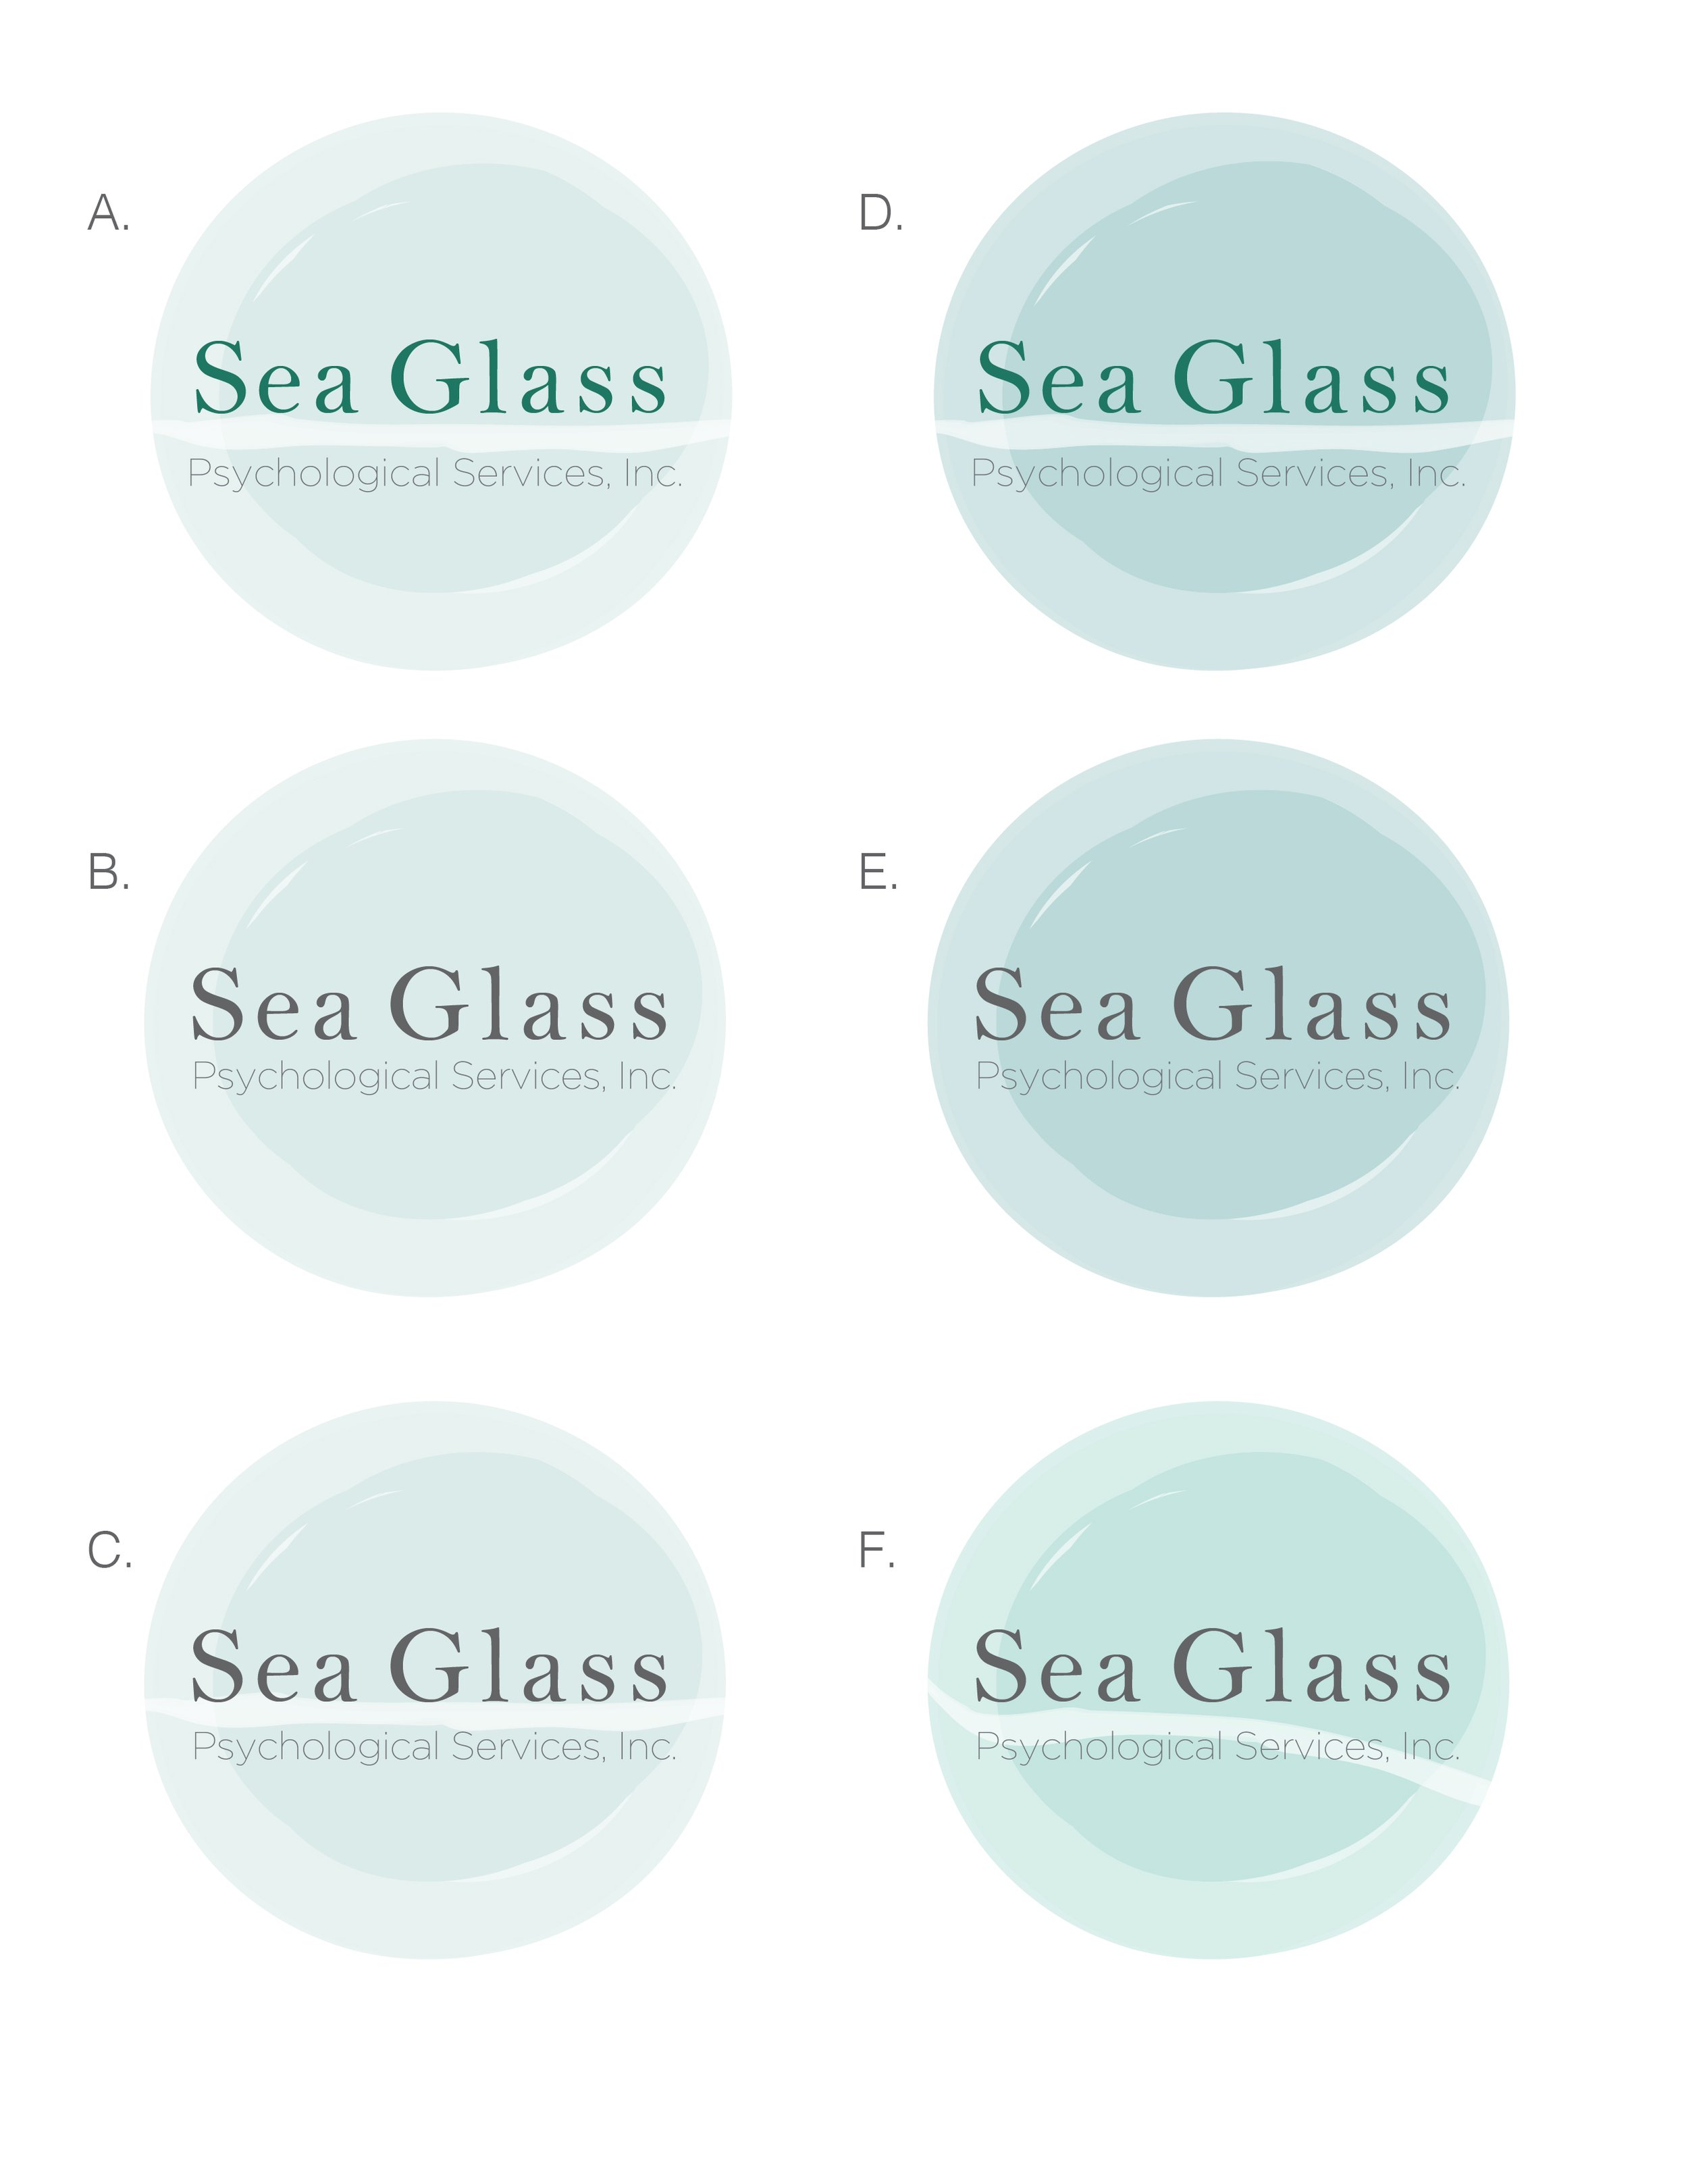 Sea Glass Logos_2-02.jpg